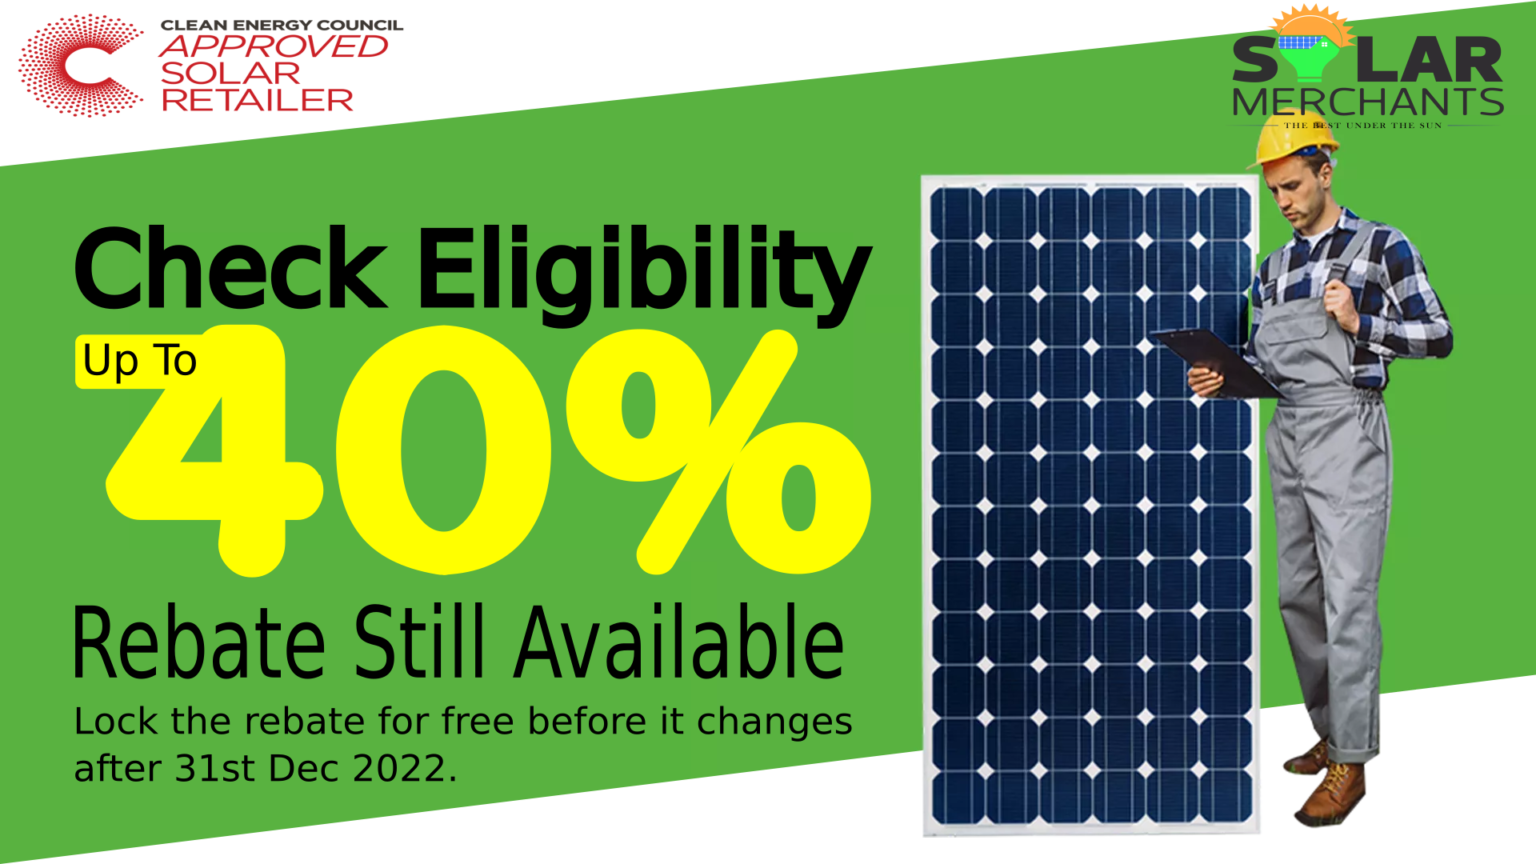 Check Rebate Eligibility For Up To 40 Solar Merchants Australia s Best Solar Company